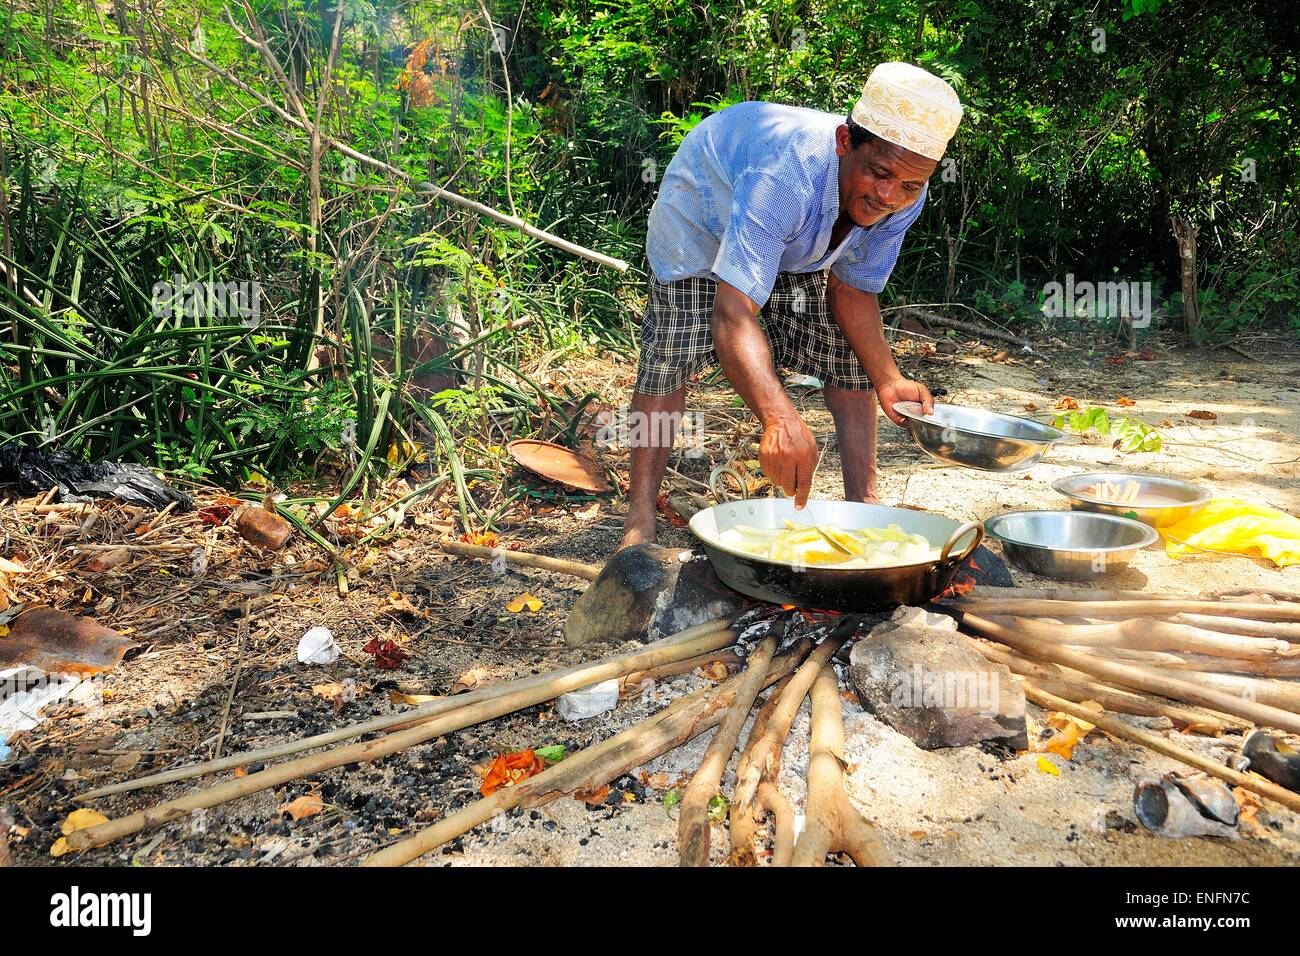 Mann beim Kochen Feuer am Strand Ilots Choizil, Mayotte Stockfoto